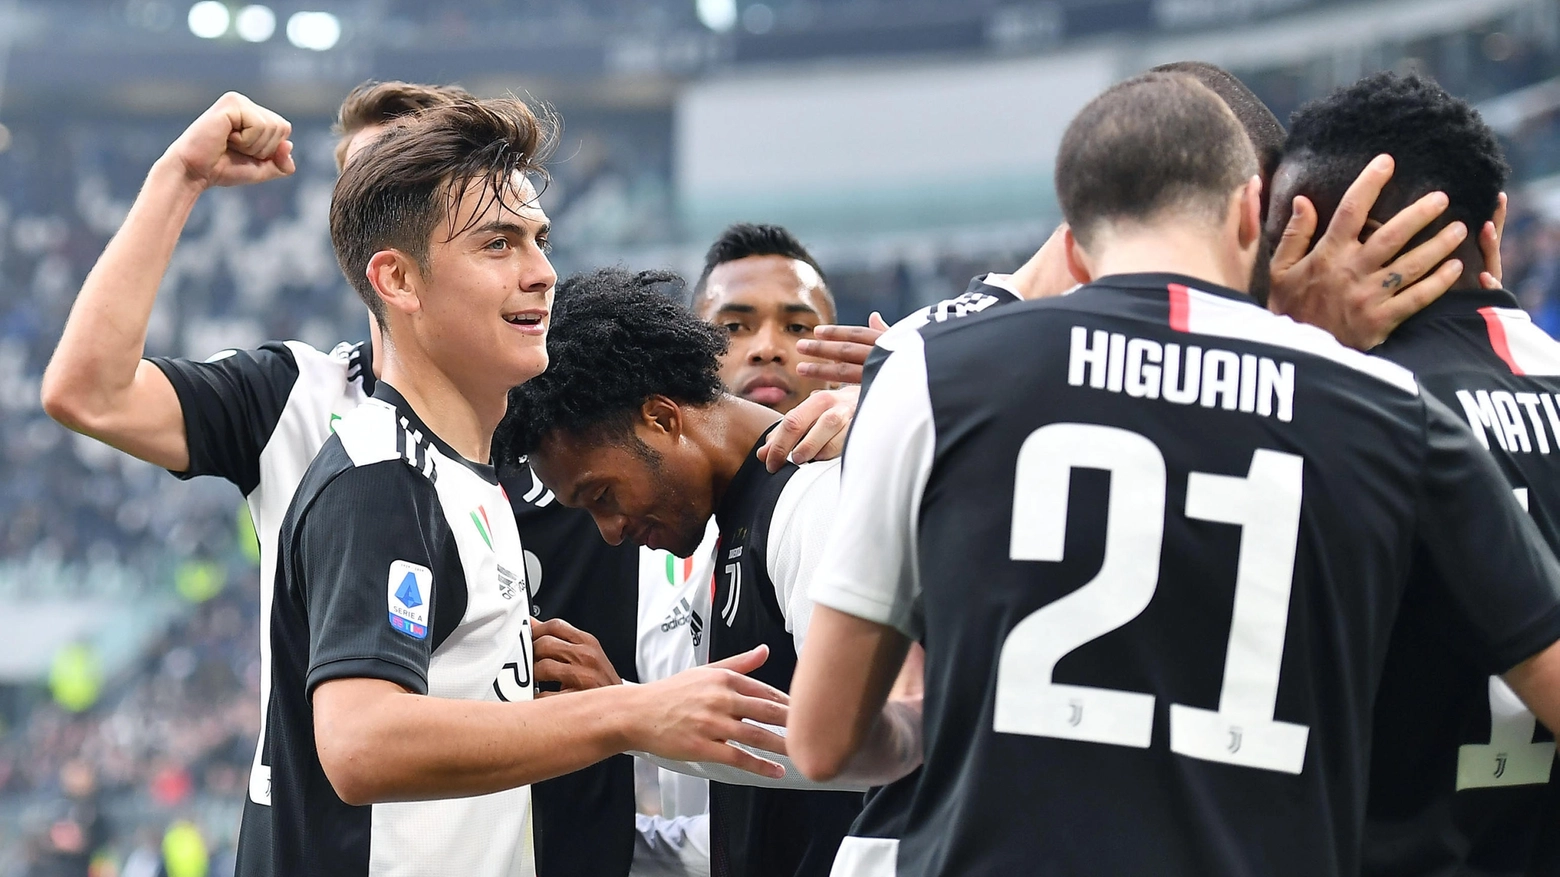 La Juventus potrebbe sfidare l'Inter regolarmente a porte aperte